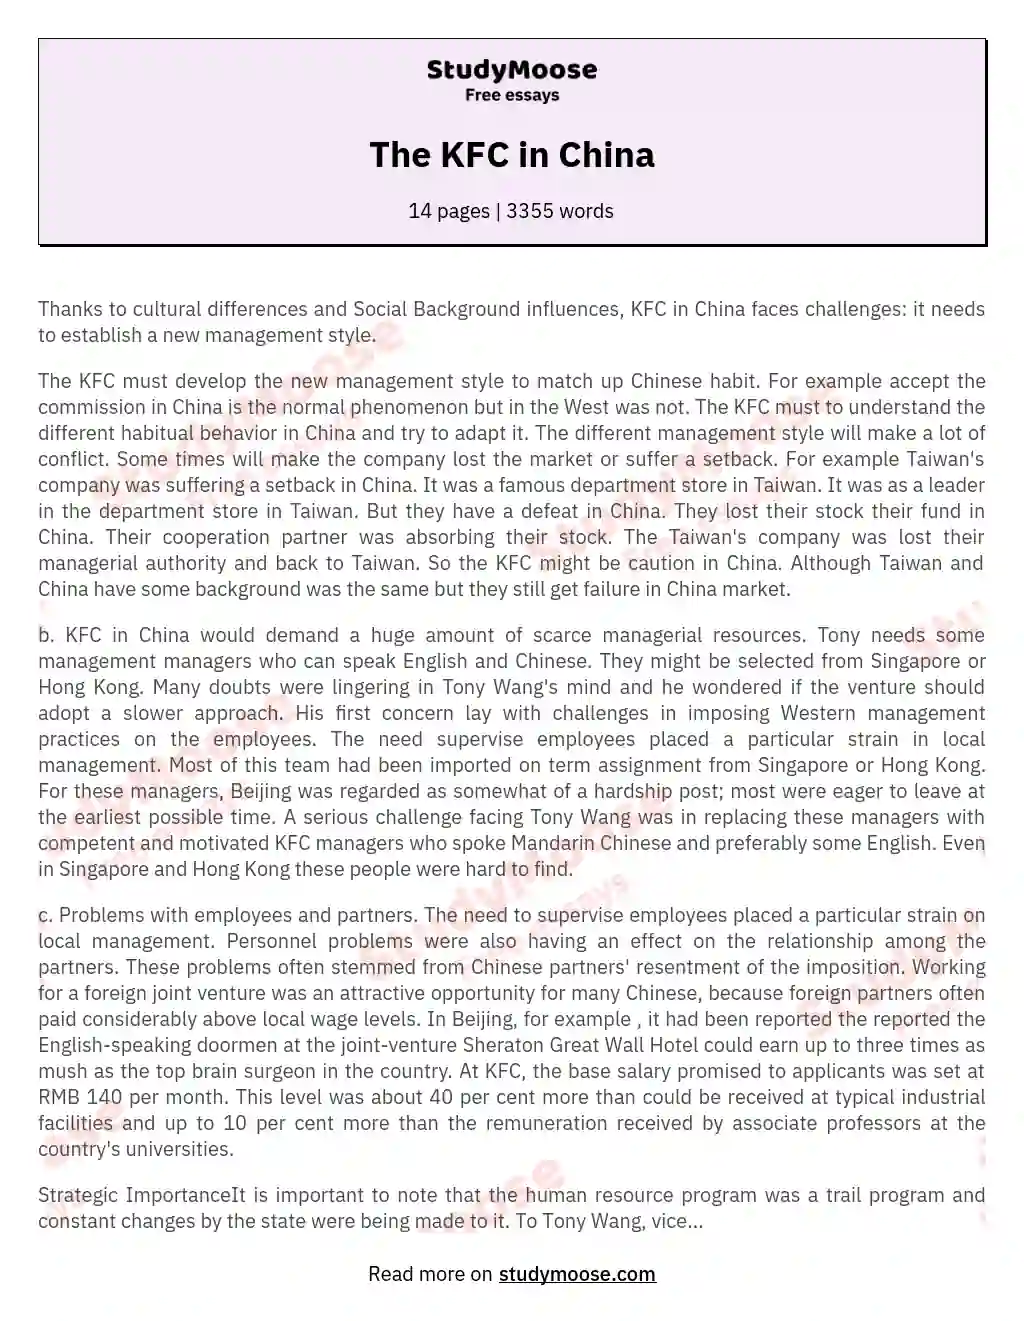 The KFC in China essay